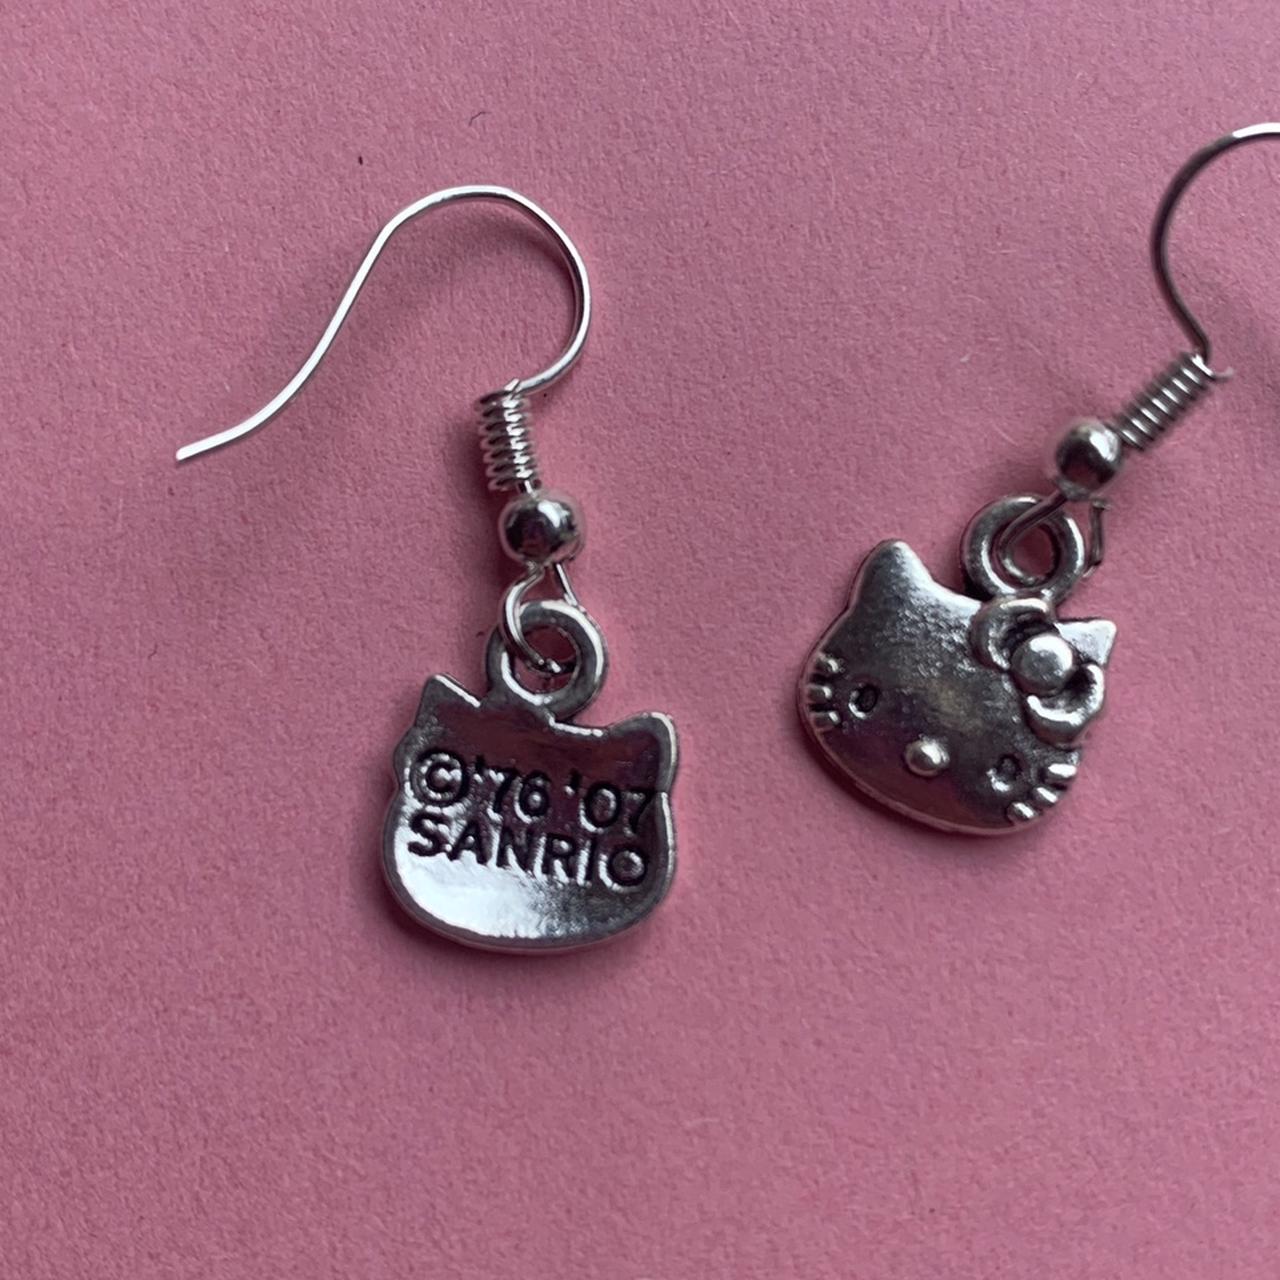 The Hello Kitty earrings